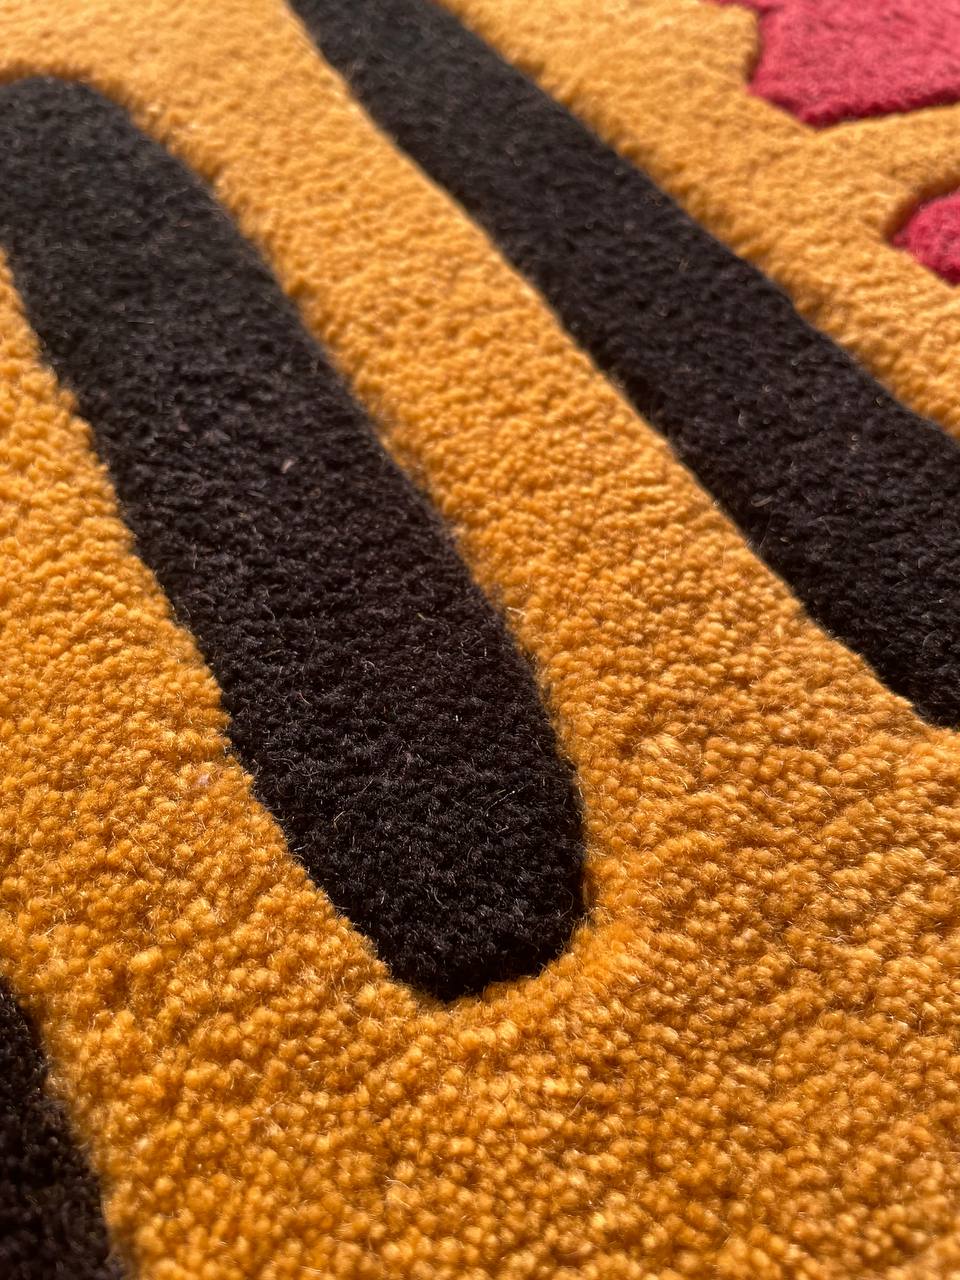 Louis Vuitton x Nigo - LV Made Tiger Carpet Rug – eluXive